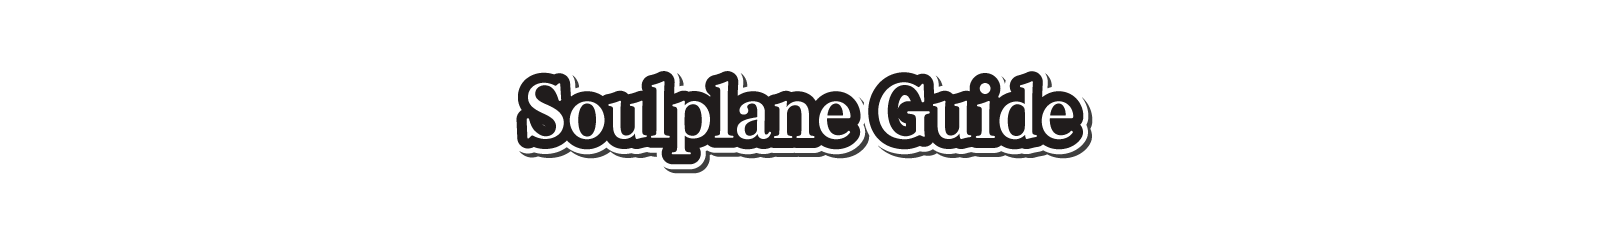 Soulplane Guide